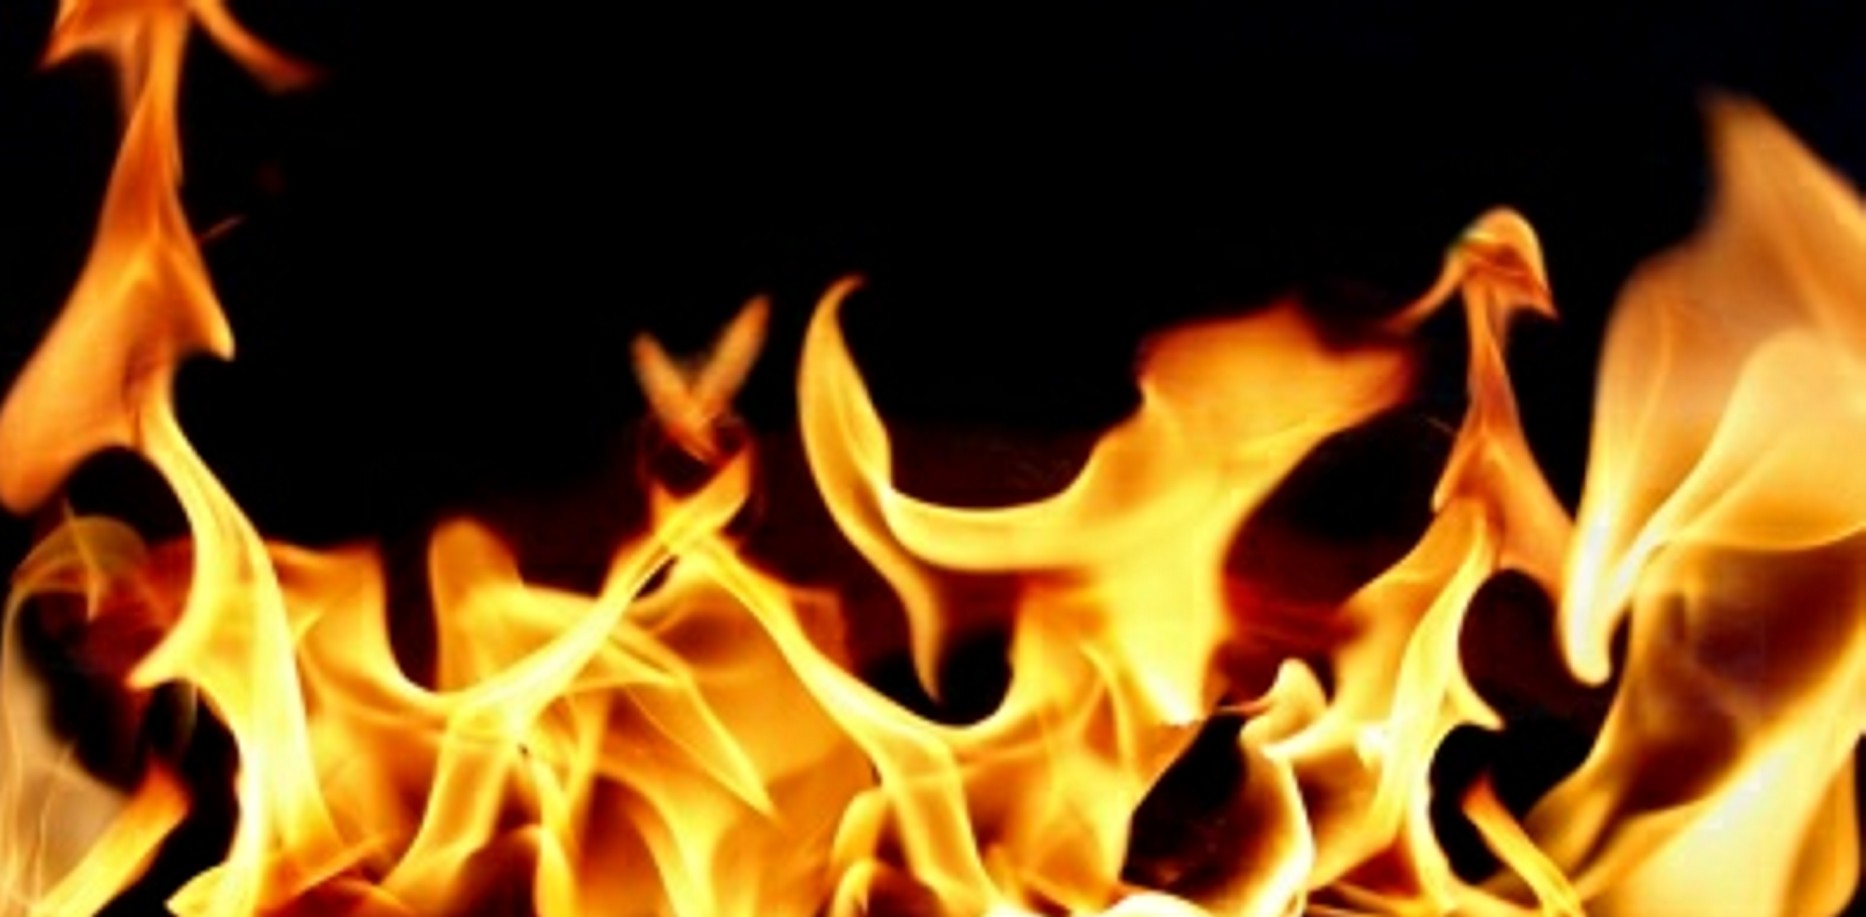 wallpaper que se mueven,fire,flame,heat,bonfire,campfire